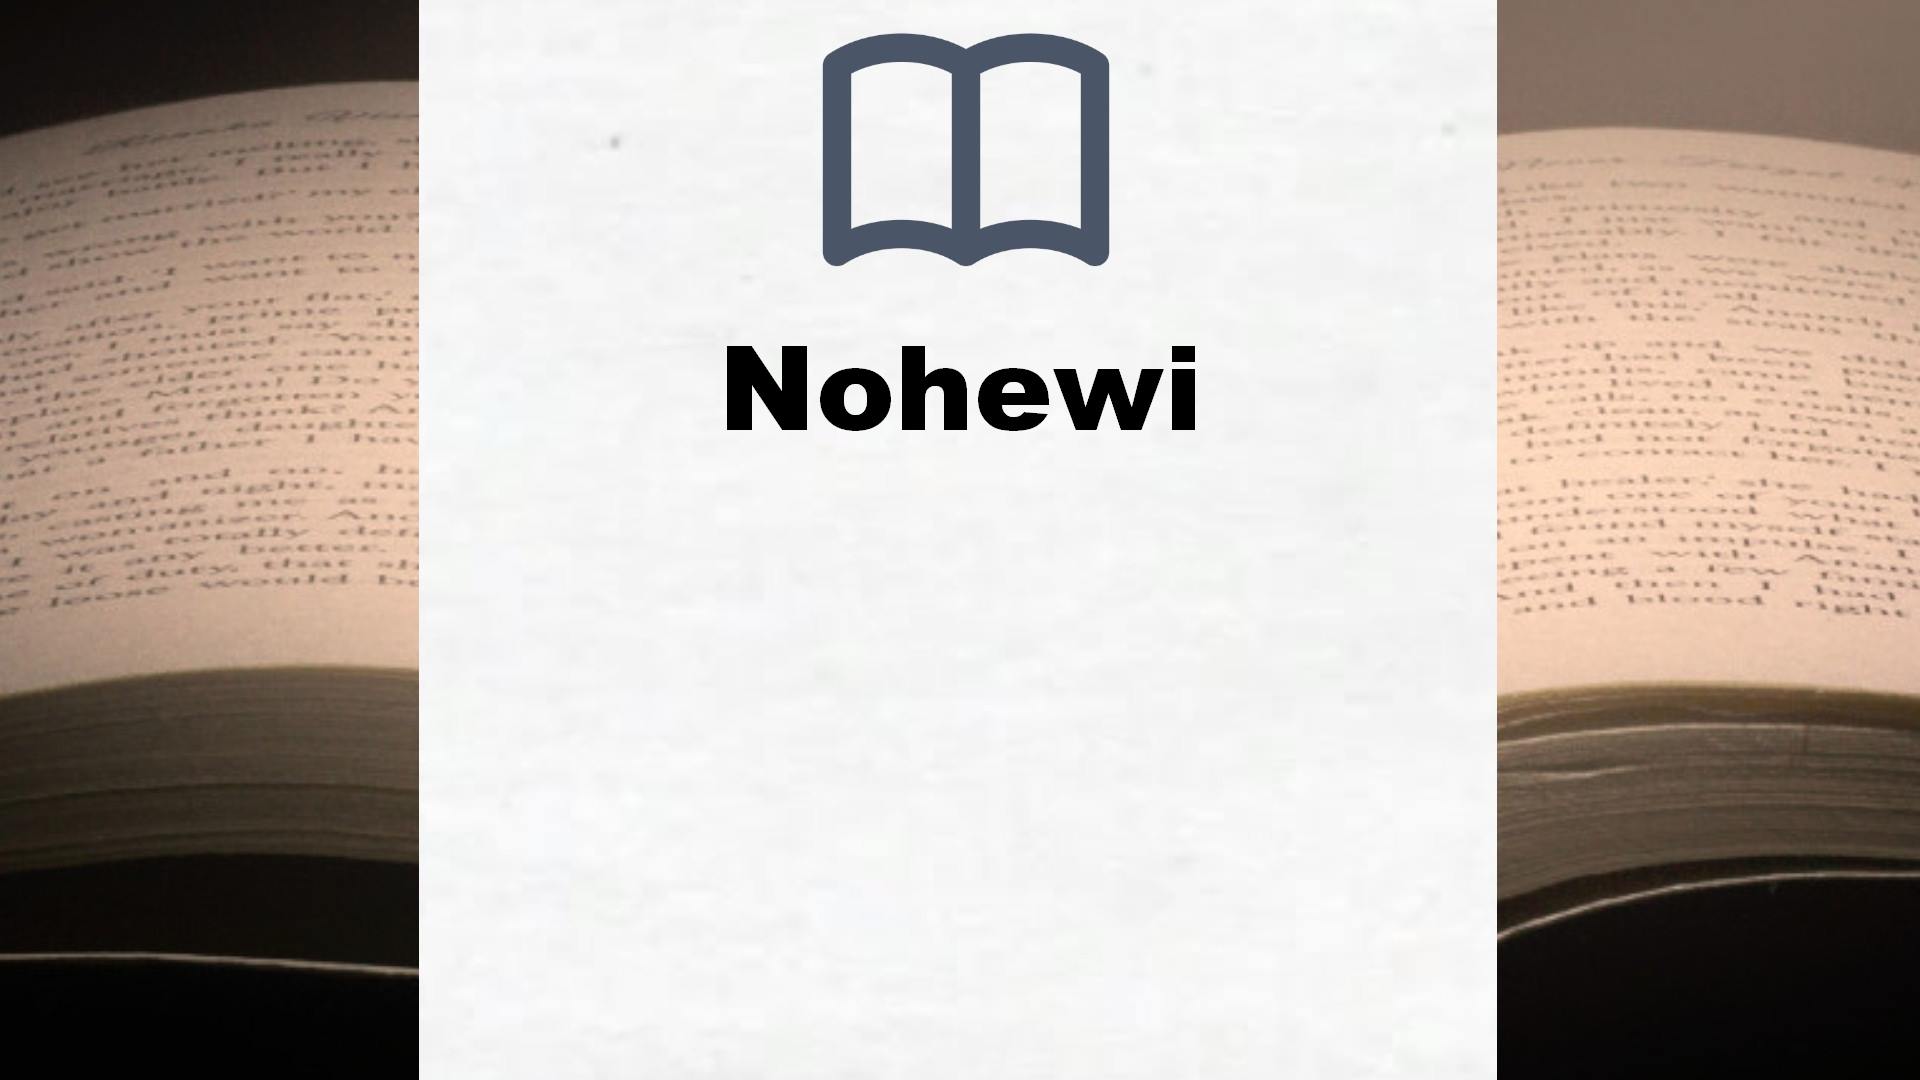 Libros Nohewi